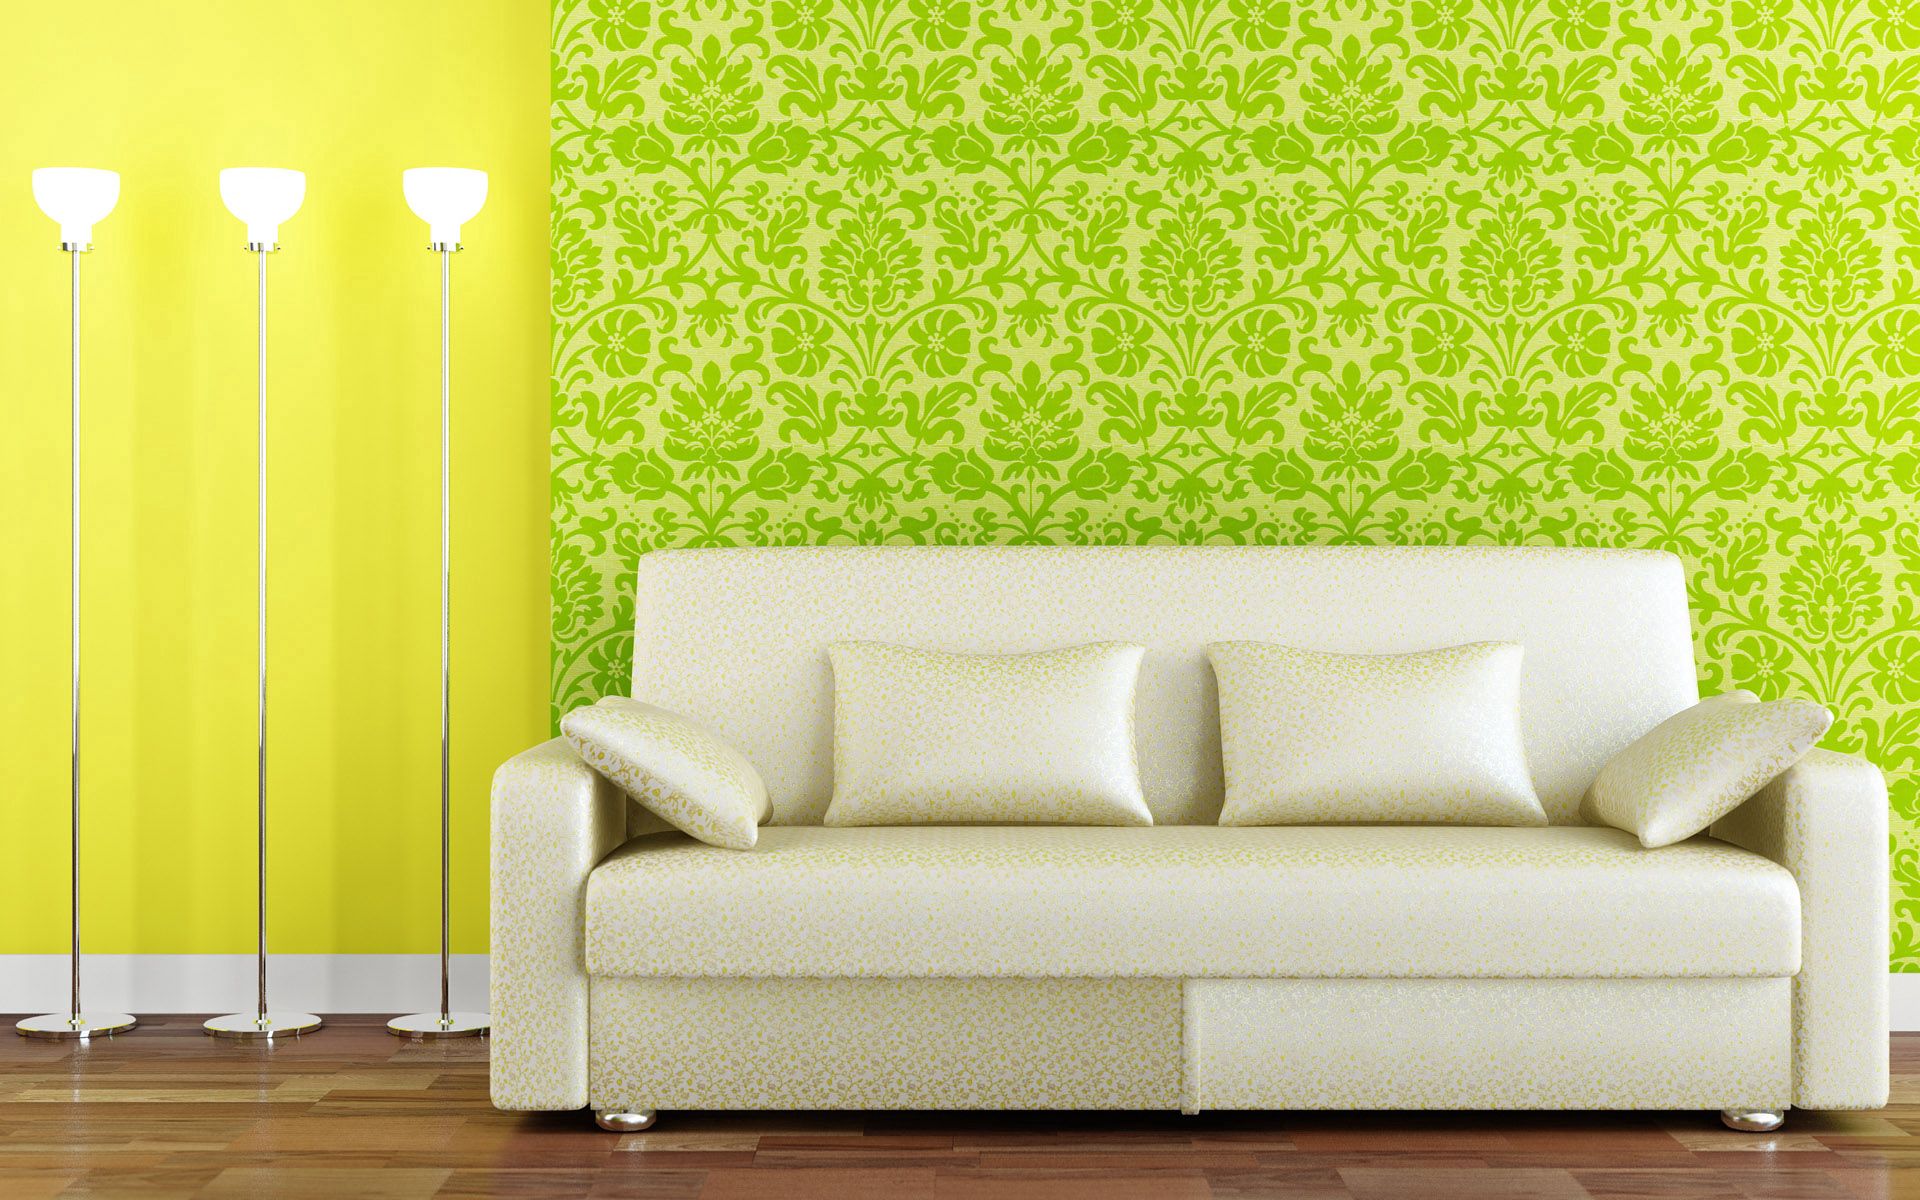 wall, wallpaper, miscellanea, miscellaneous, lamp, style, sofa, lamps